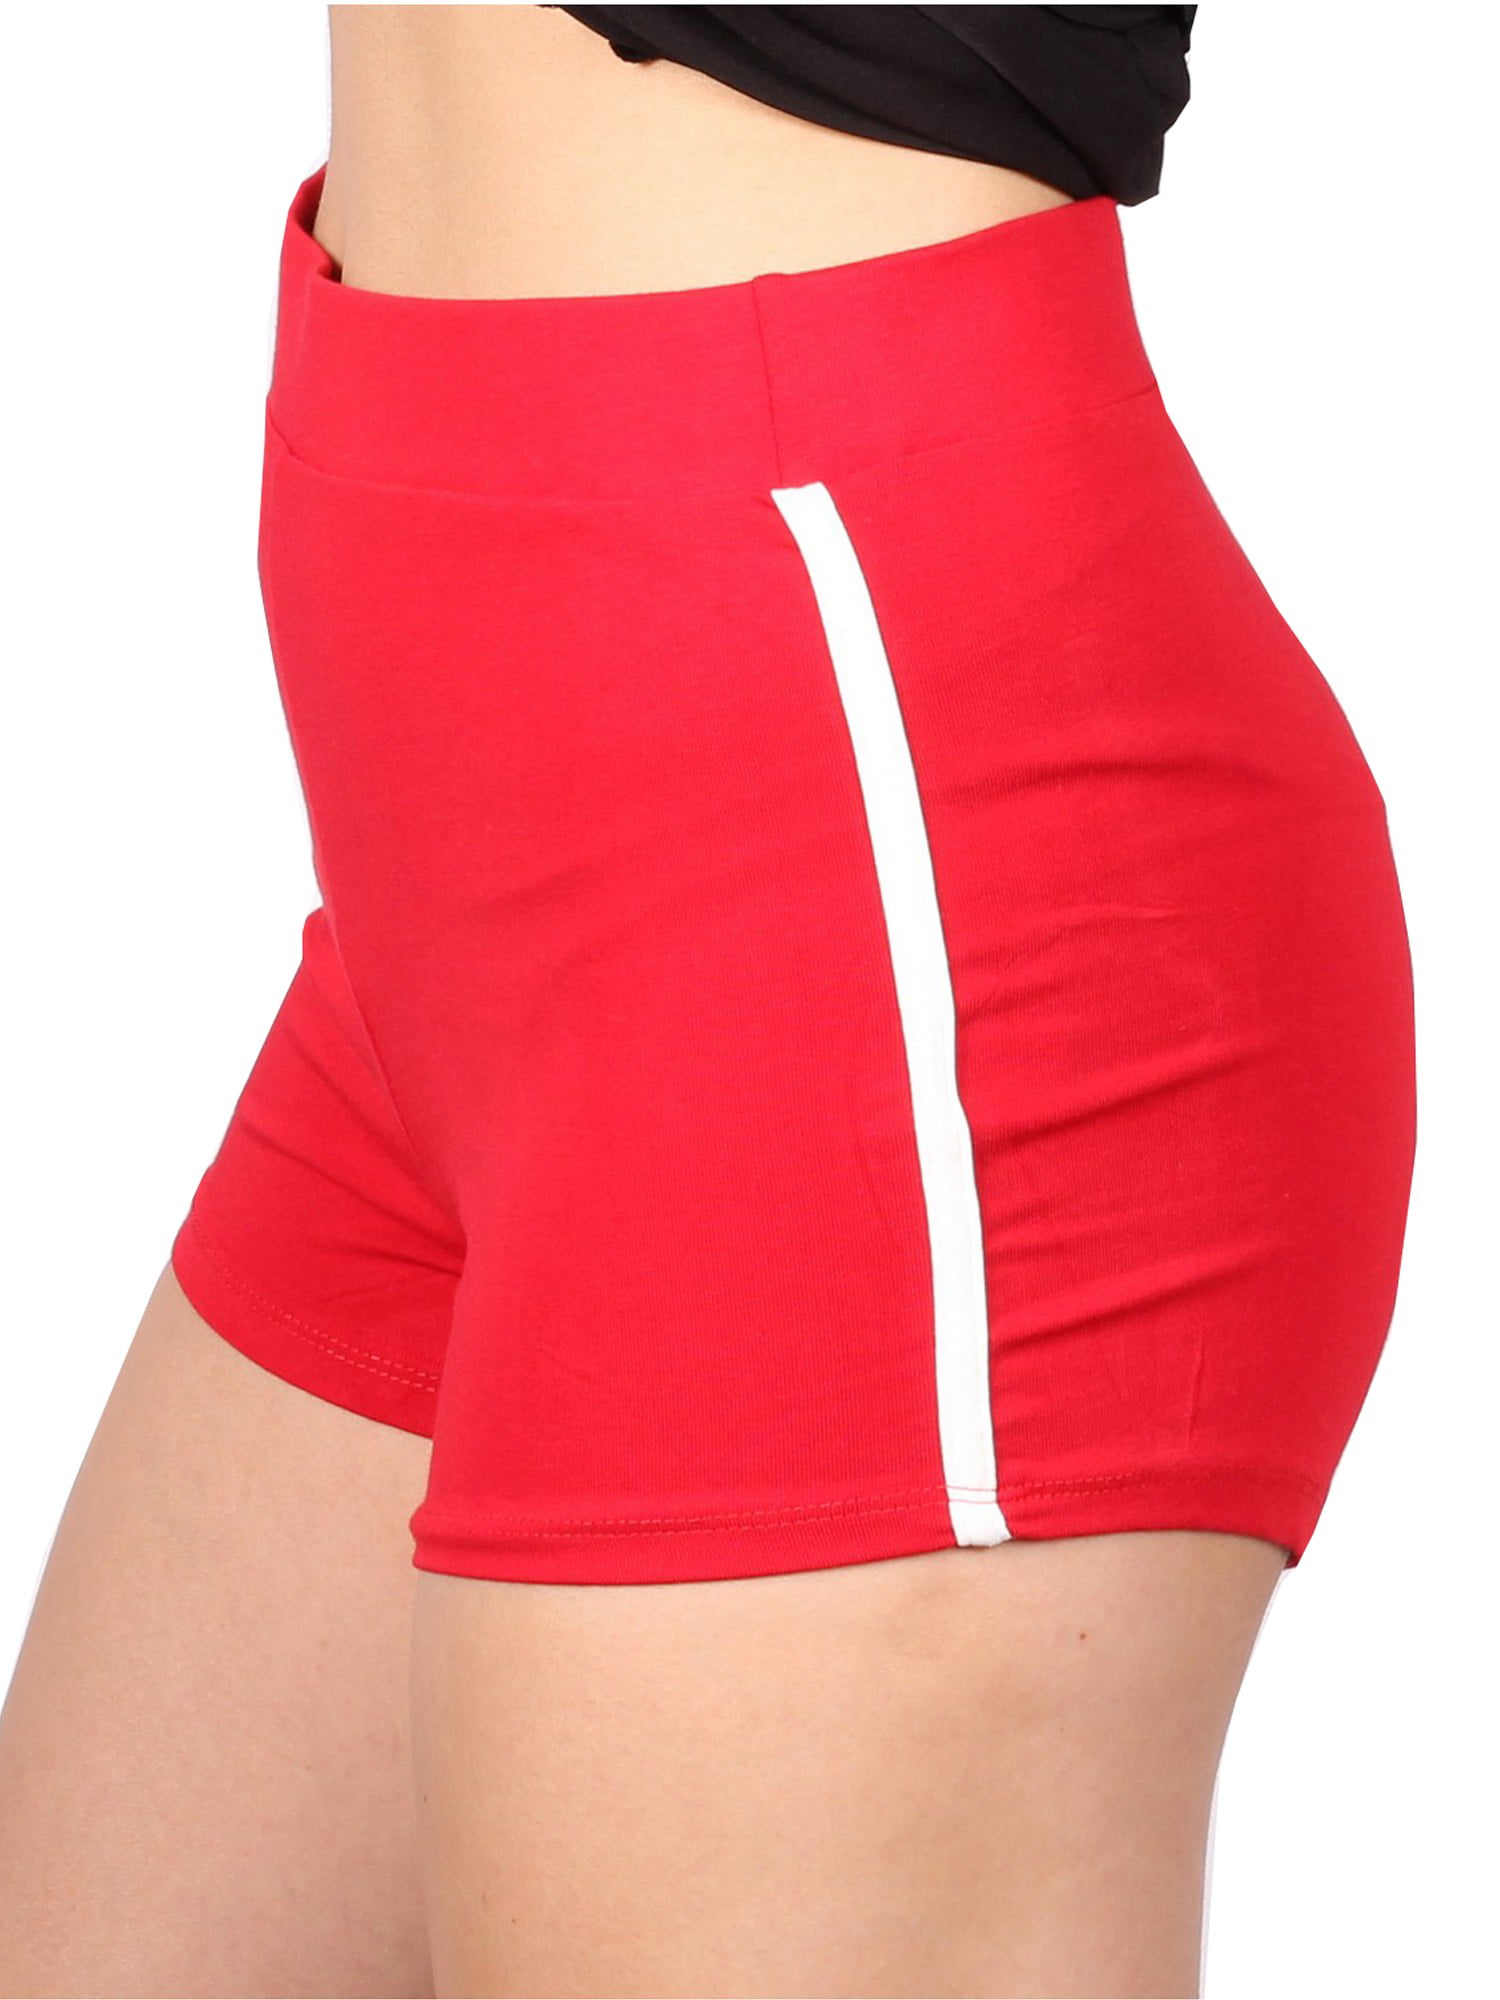 Lori&Jane Girls Red Side Stripe Shorts - Walmart.com